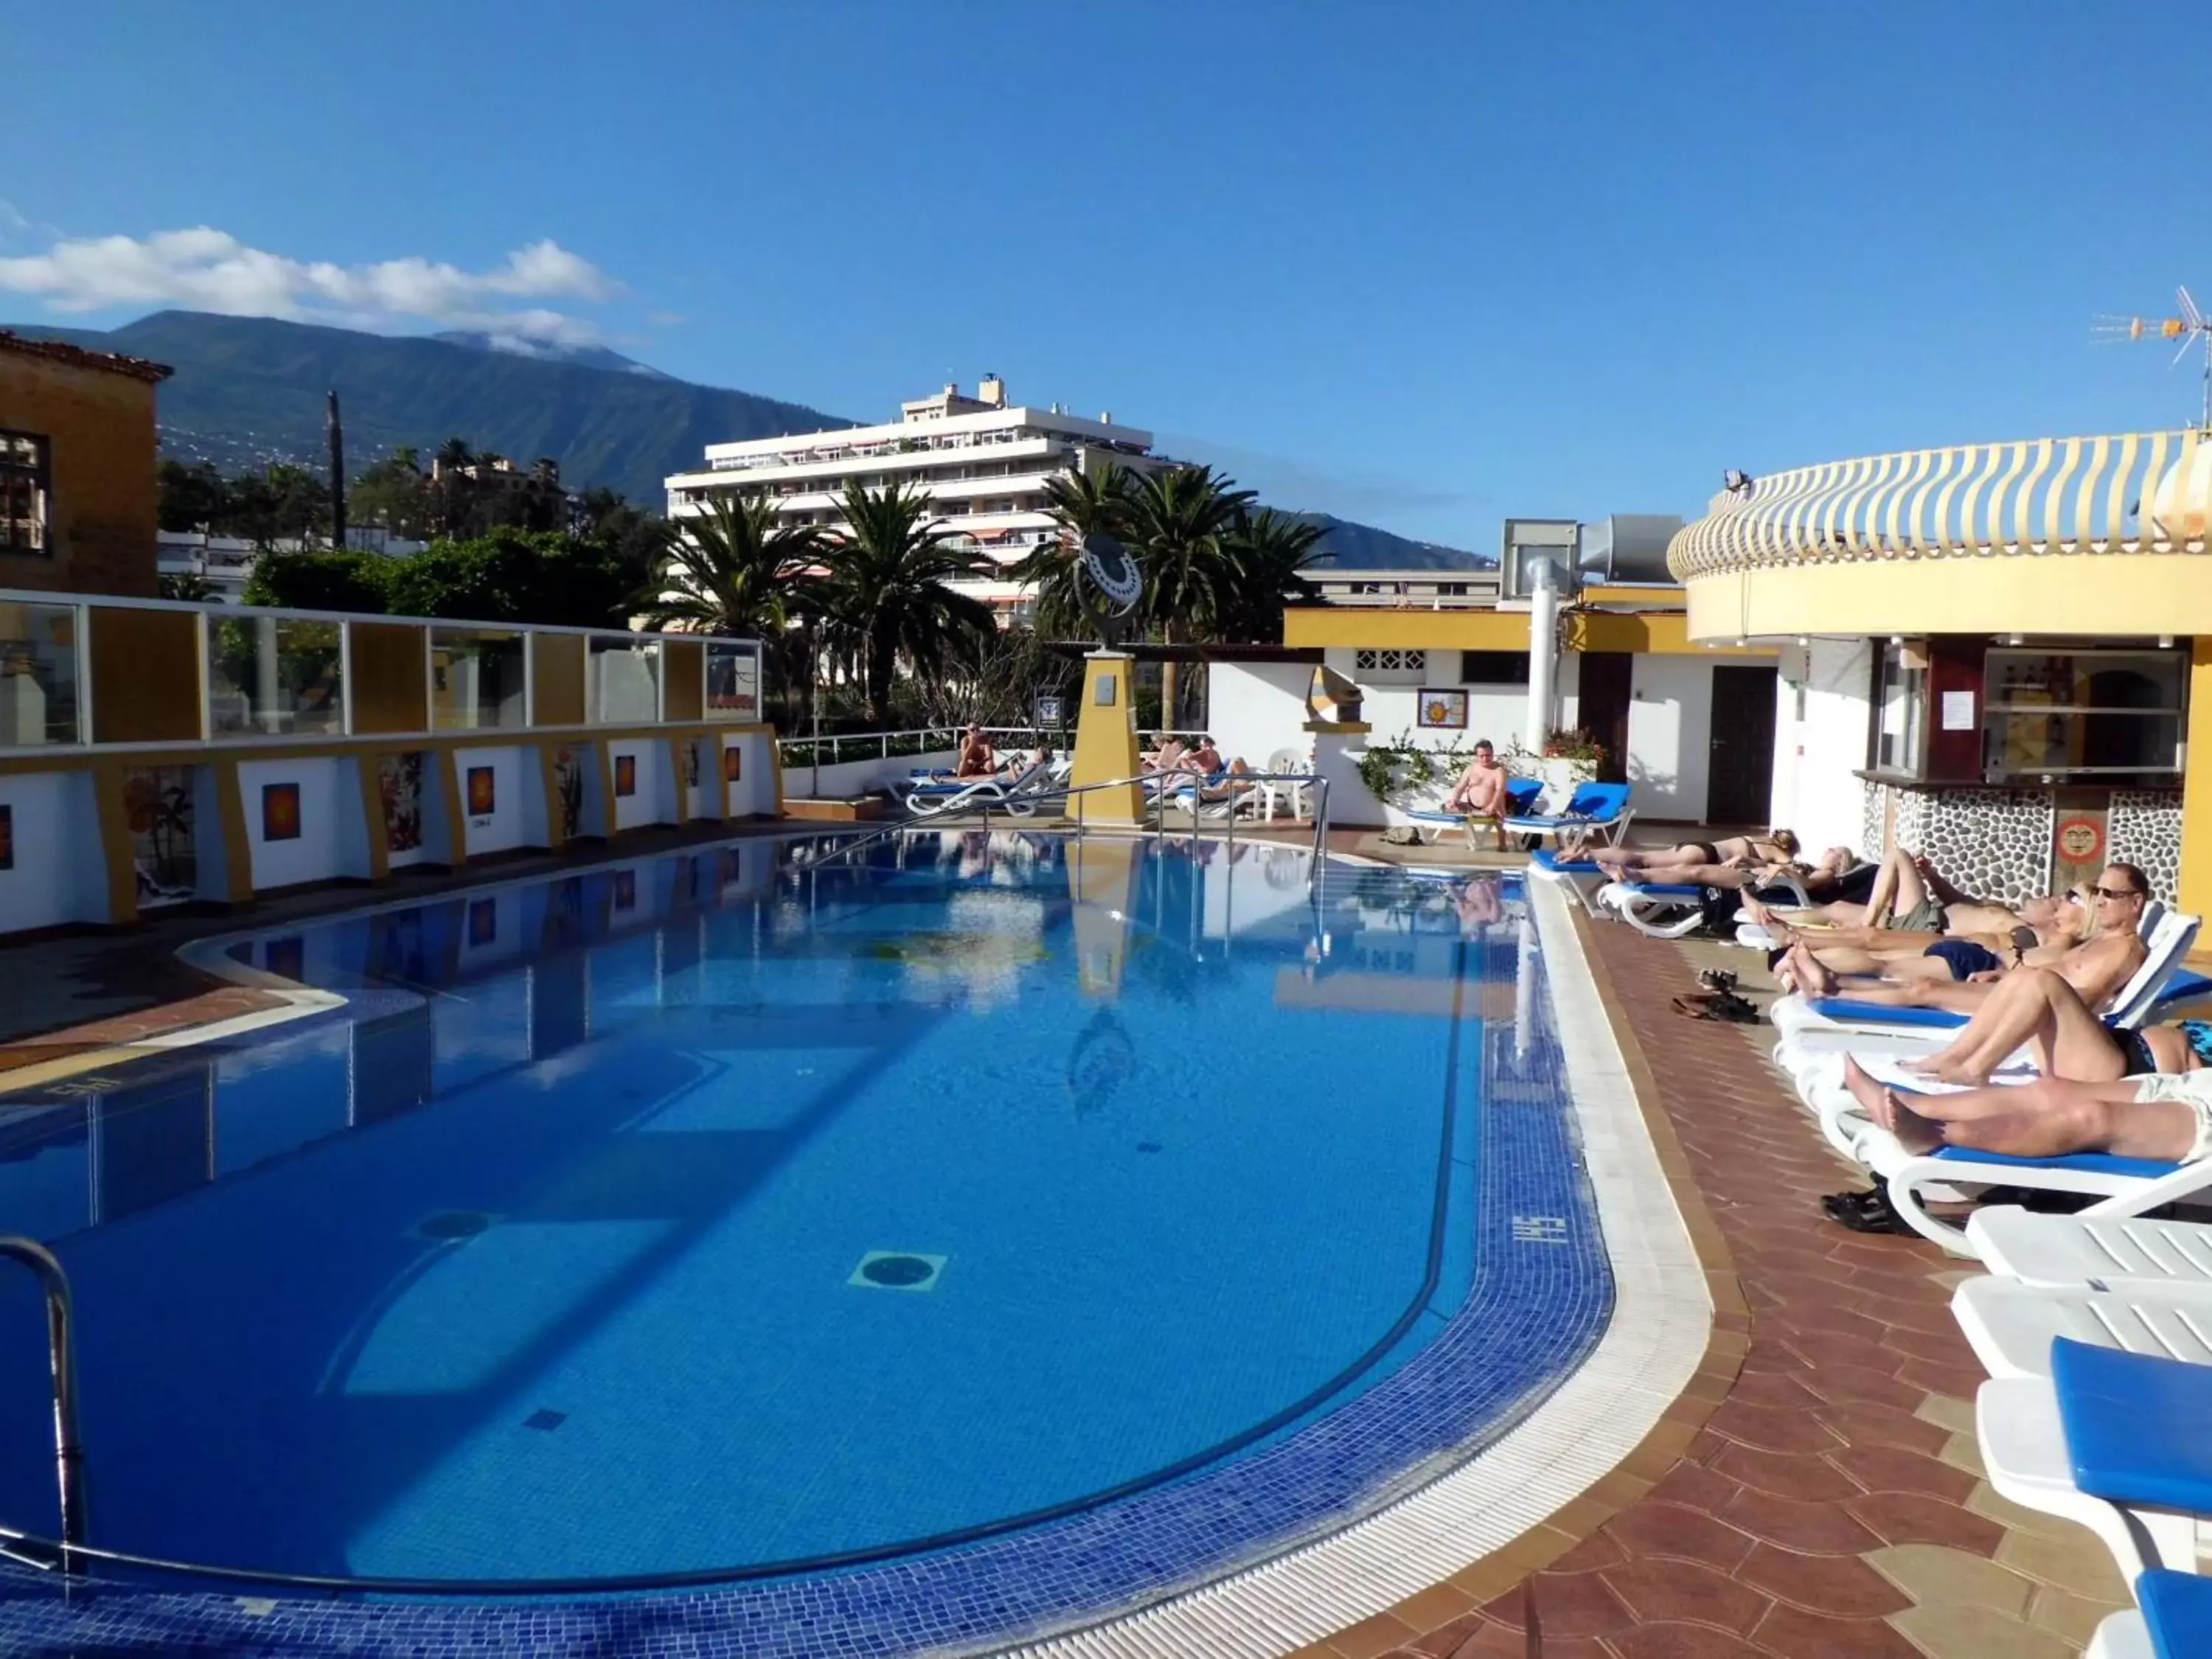 Swimming Pool in Hotel Casa del Sol